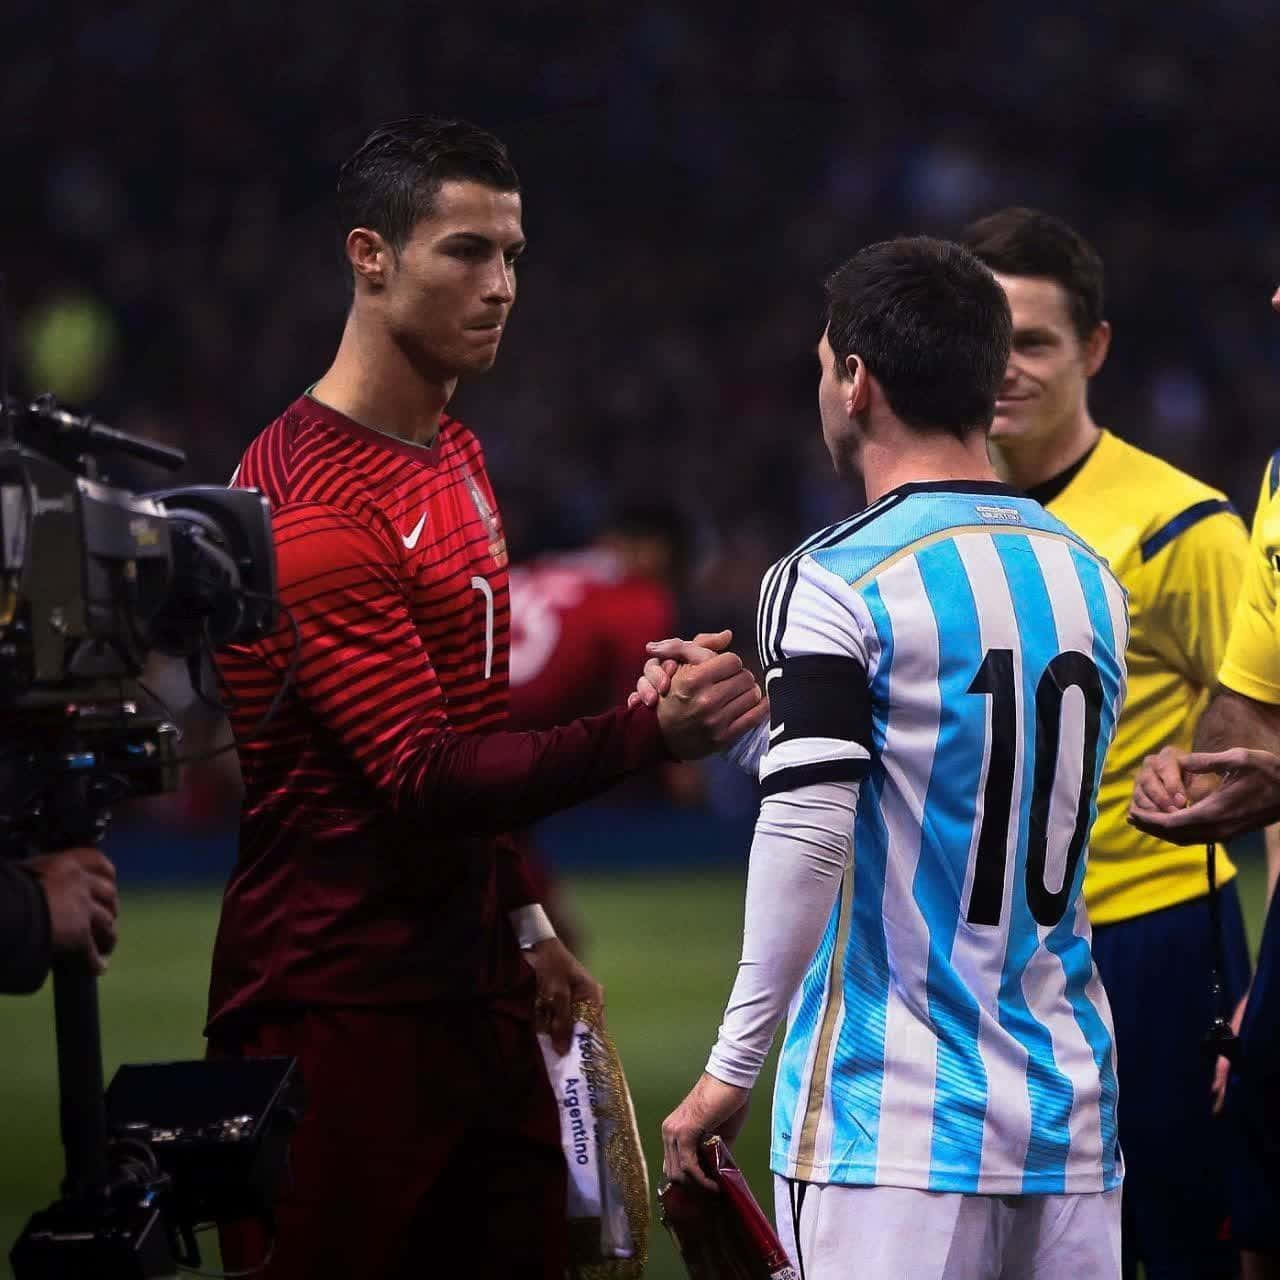 Download Ronaldo Messi Handshake Football Match Wallpaper | Wallpapers.com